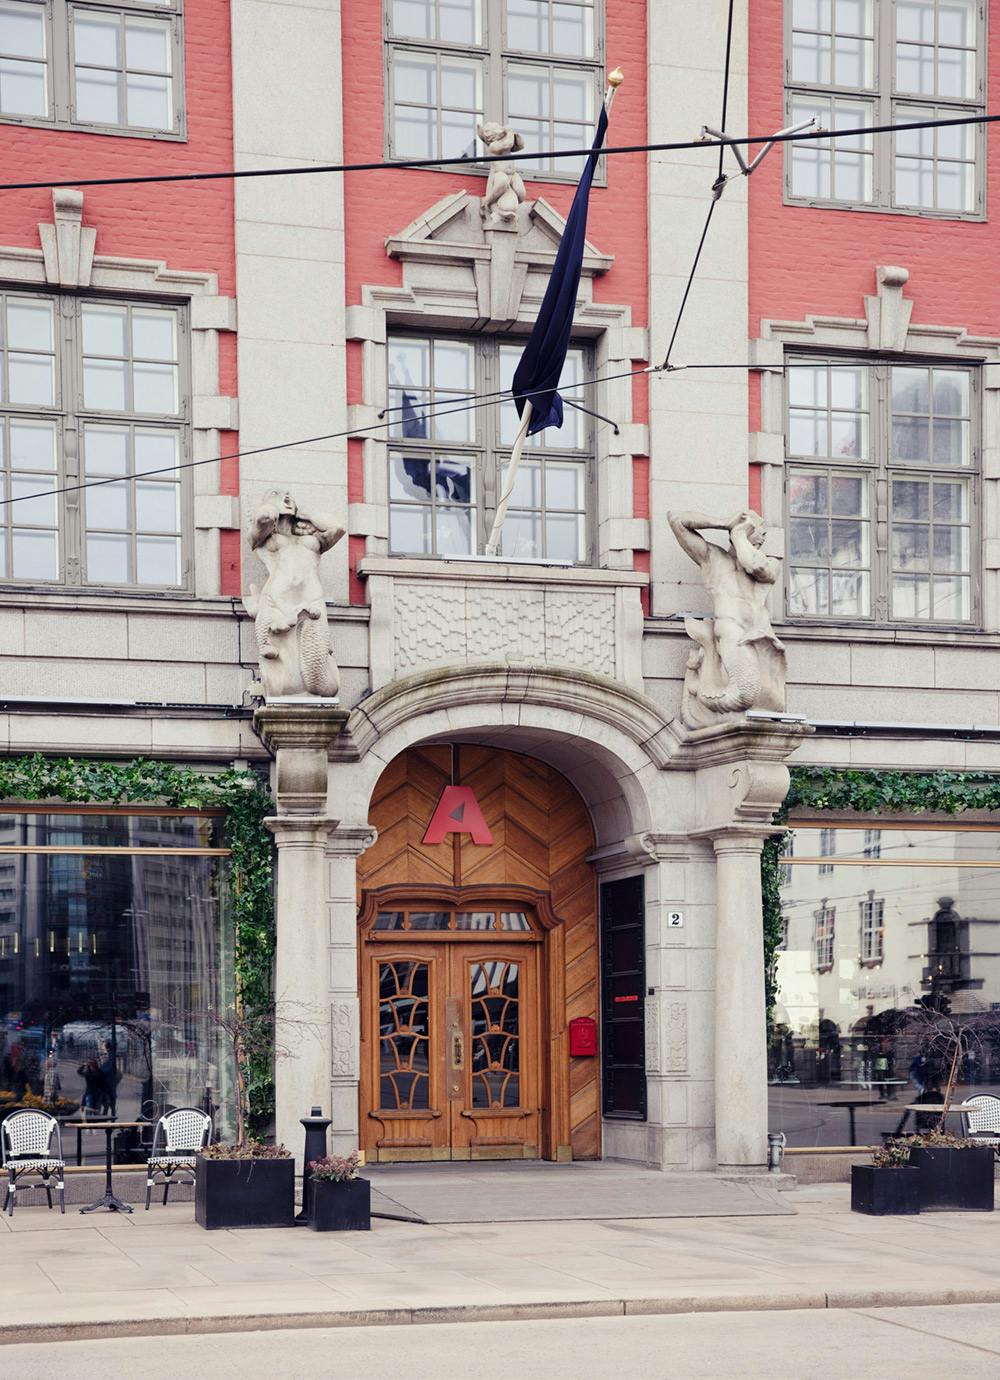 Imagem número 33 da actual secção de A century old building gets a new lease of life as one of Oslo’s most vibrant hotels thanks to Silestone da Cosentino Portugal